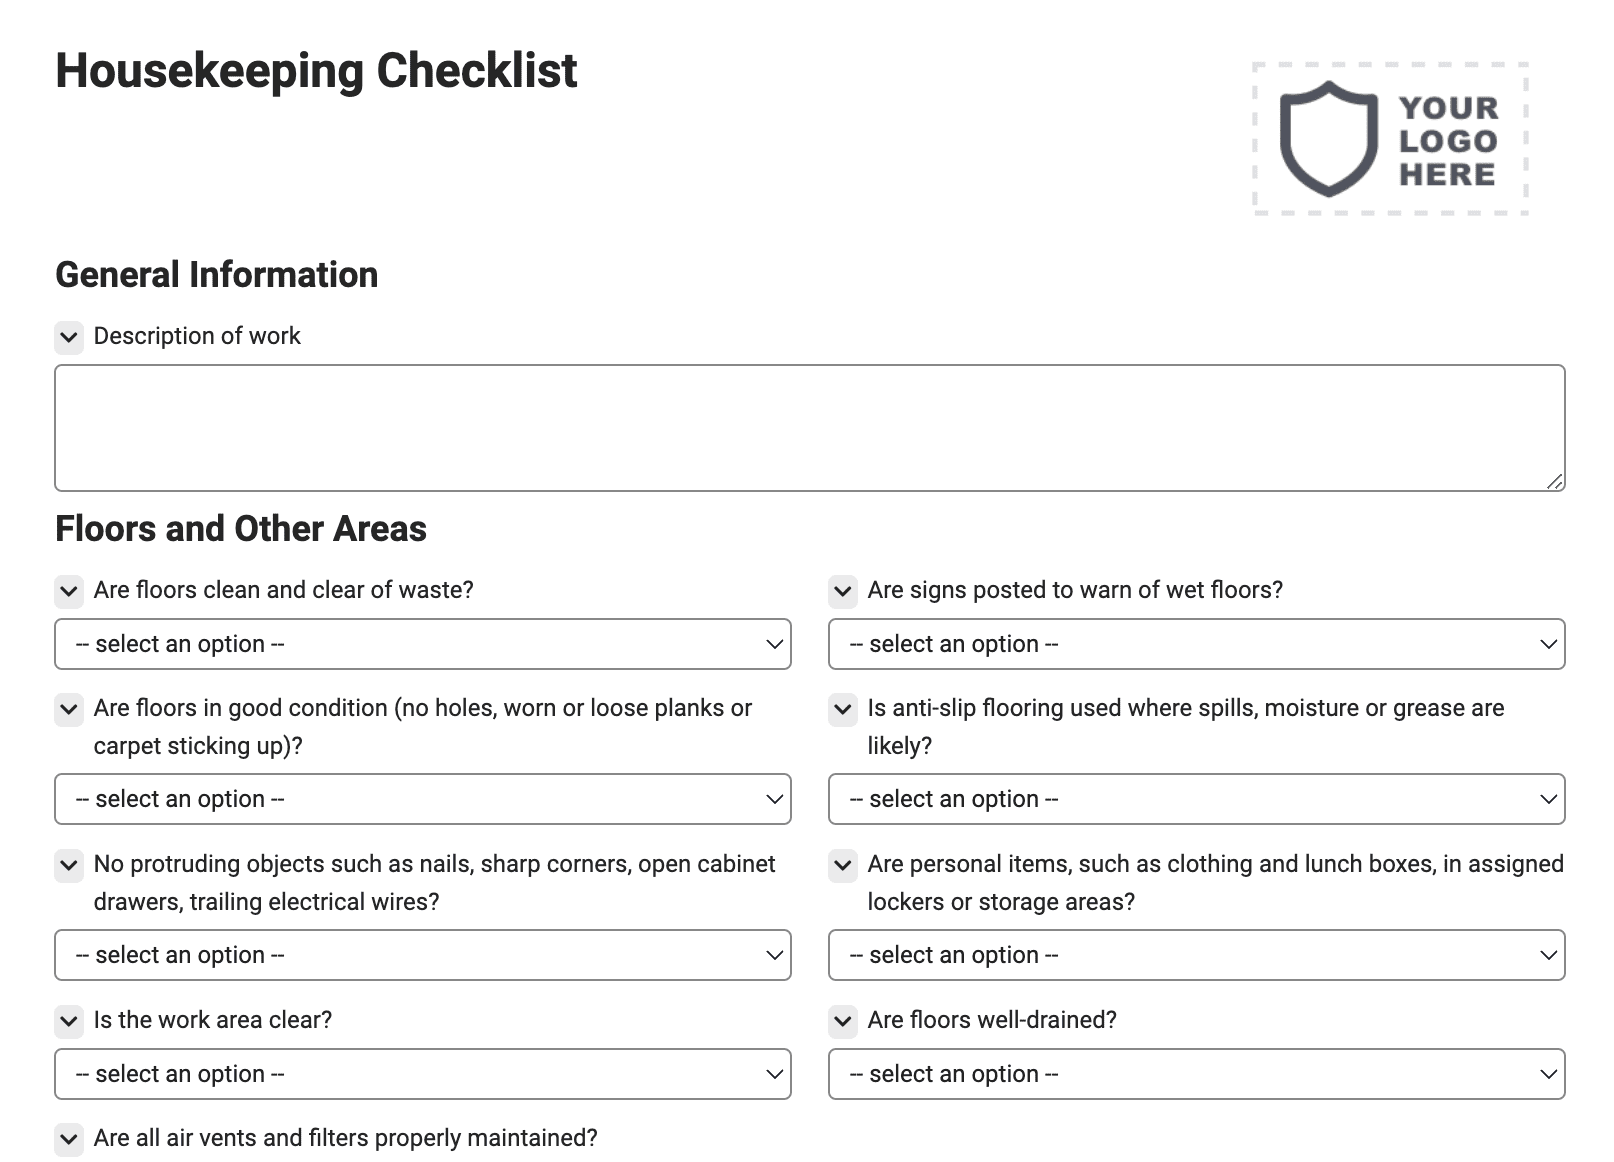 Housekeeping Checklist